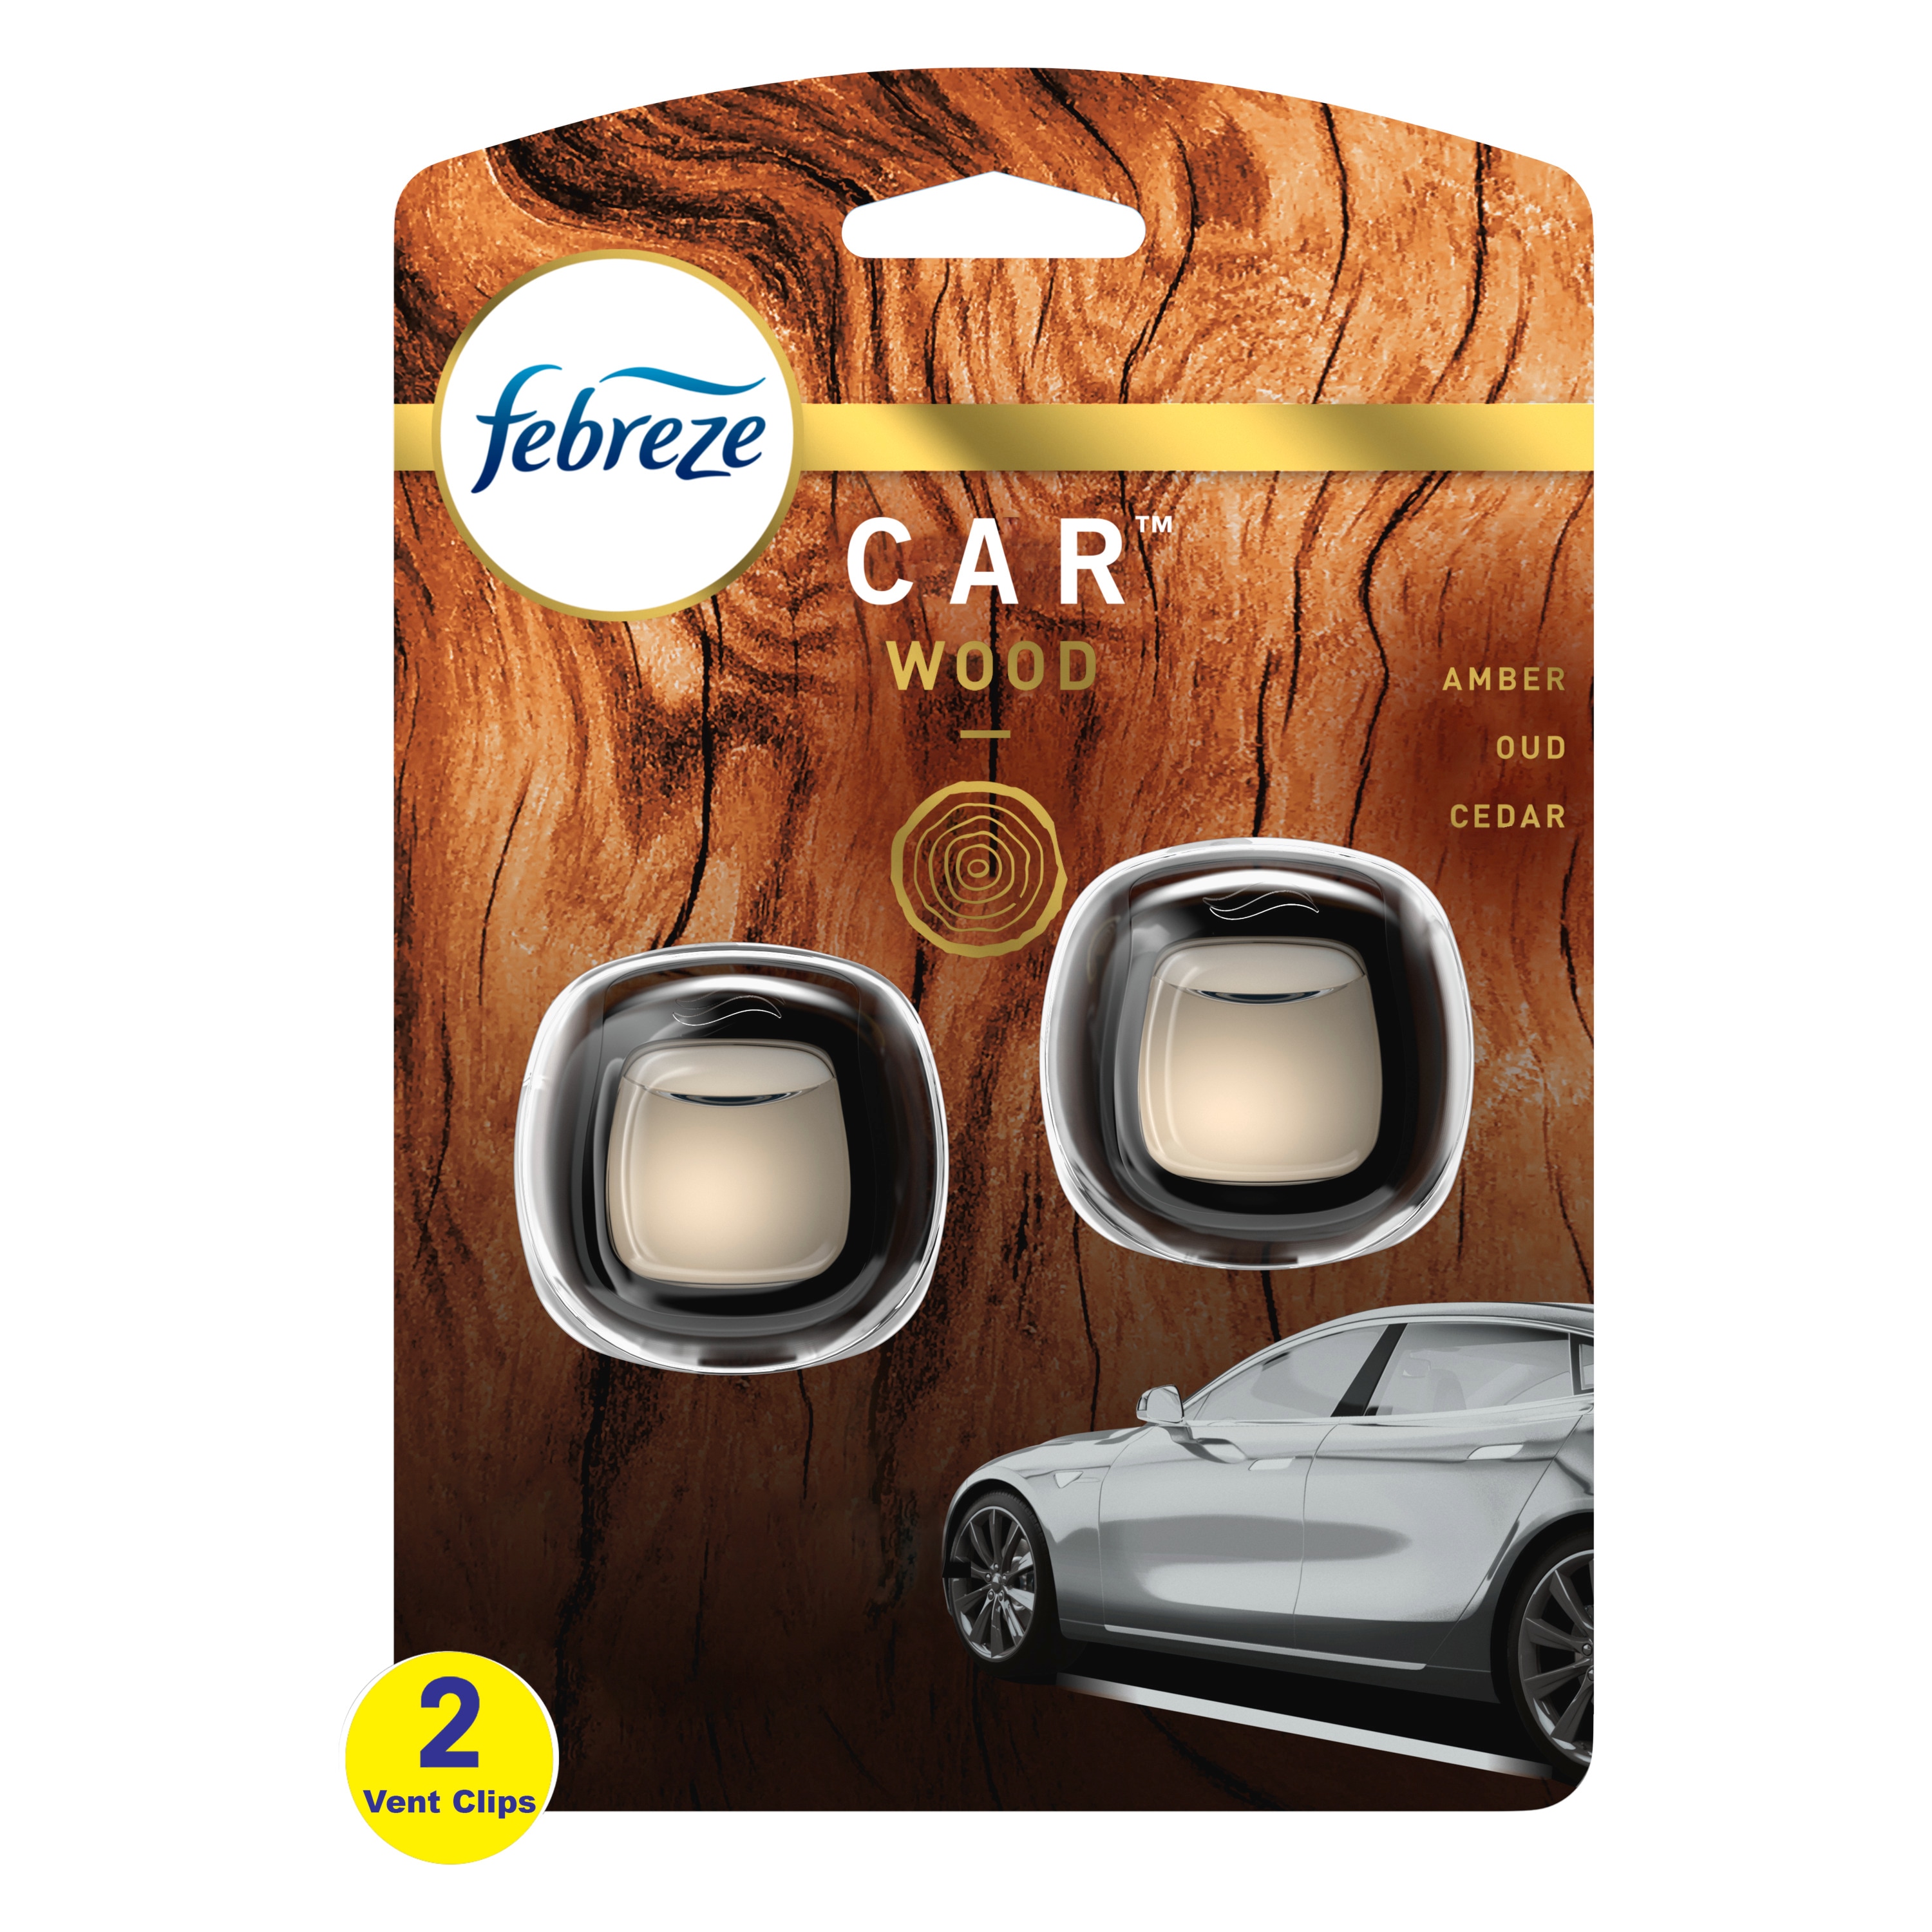 Car Air freshener diffuser Car brand logo wood various scents